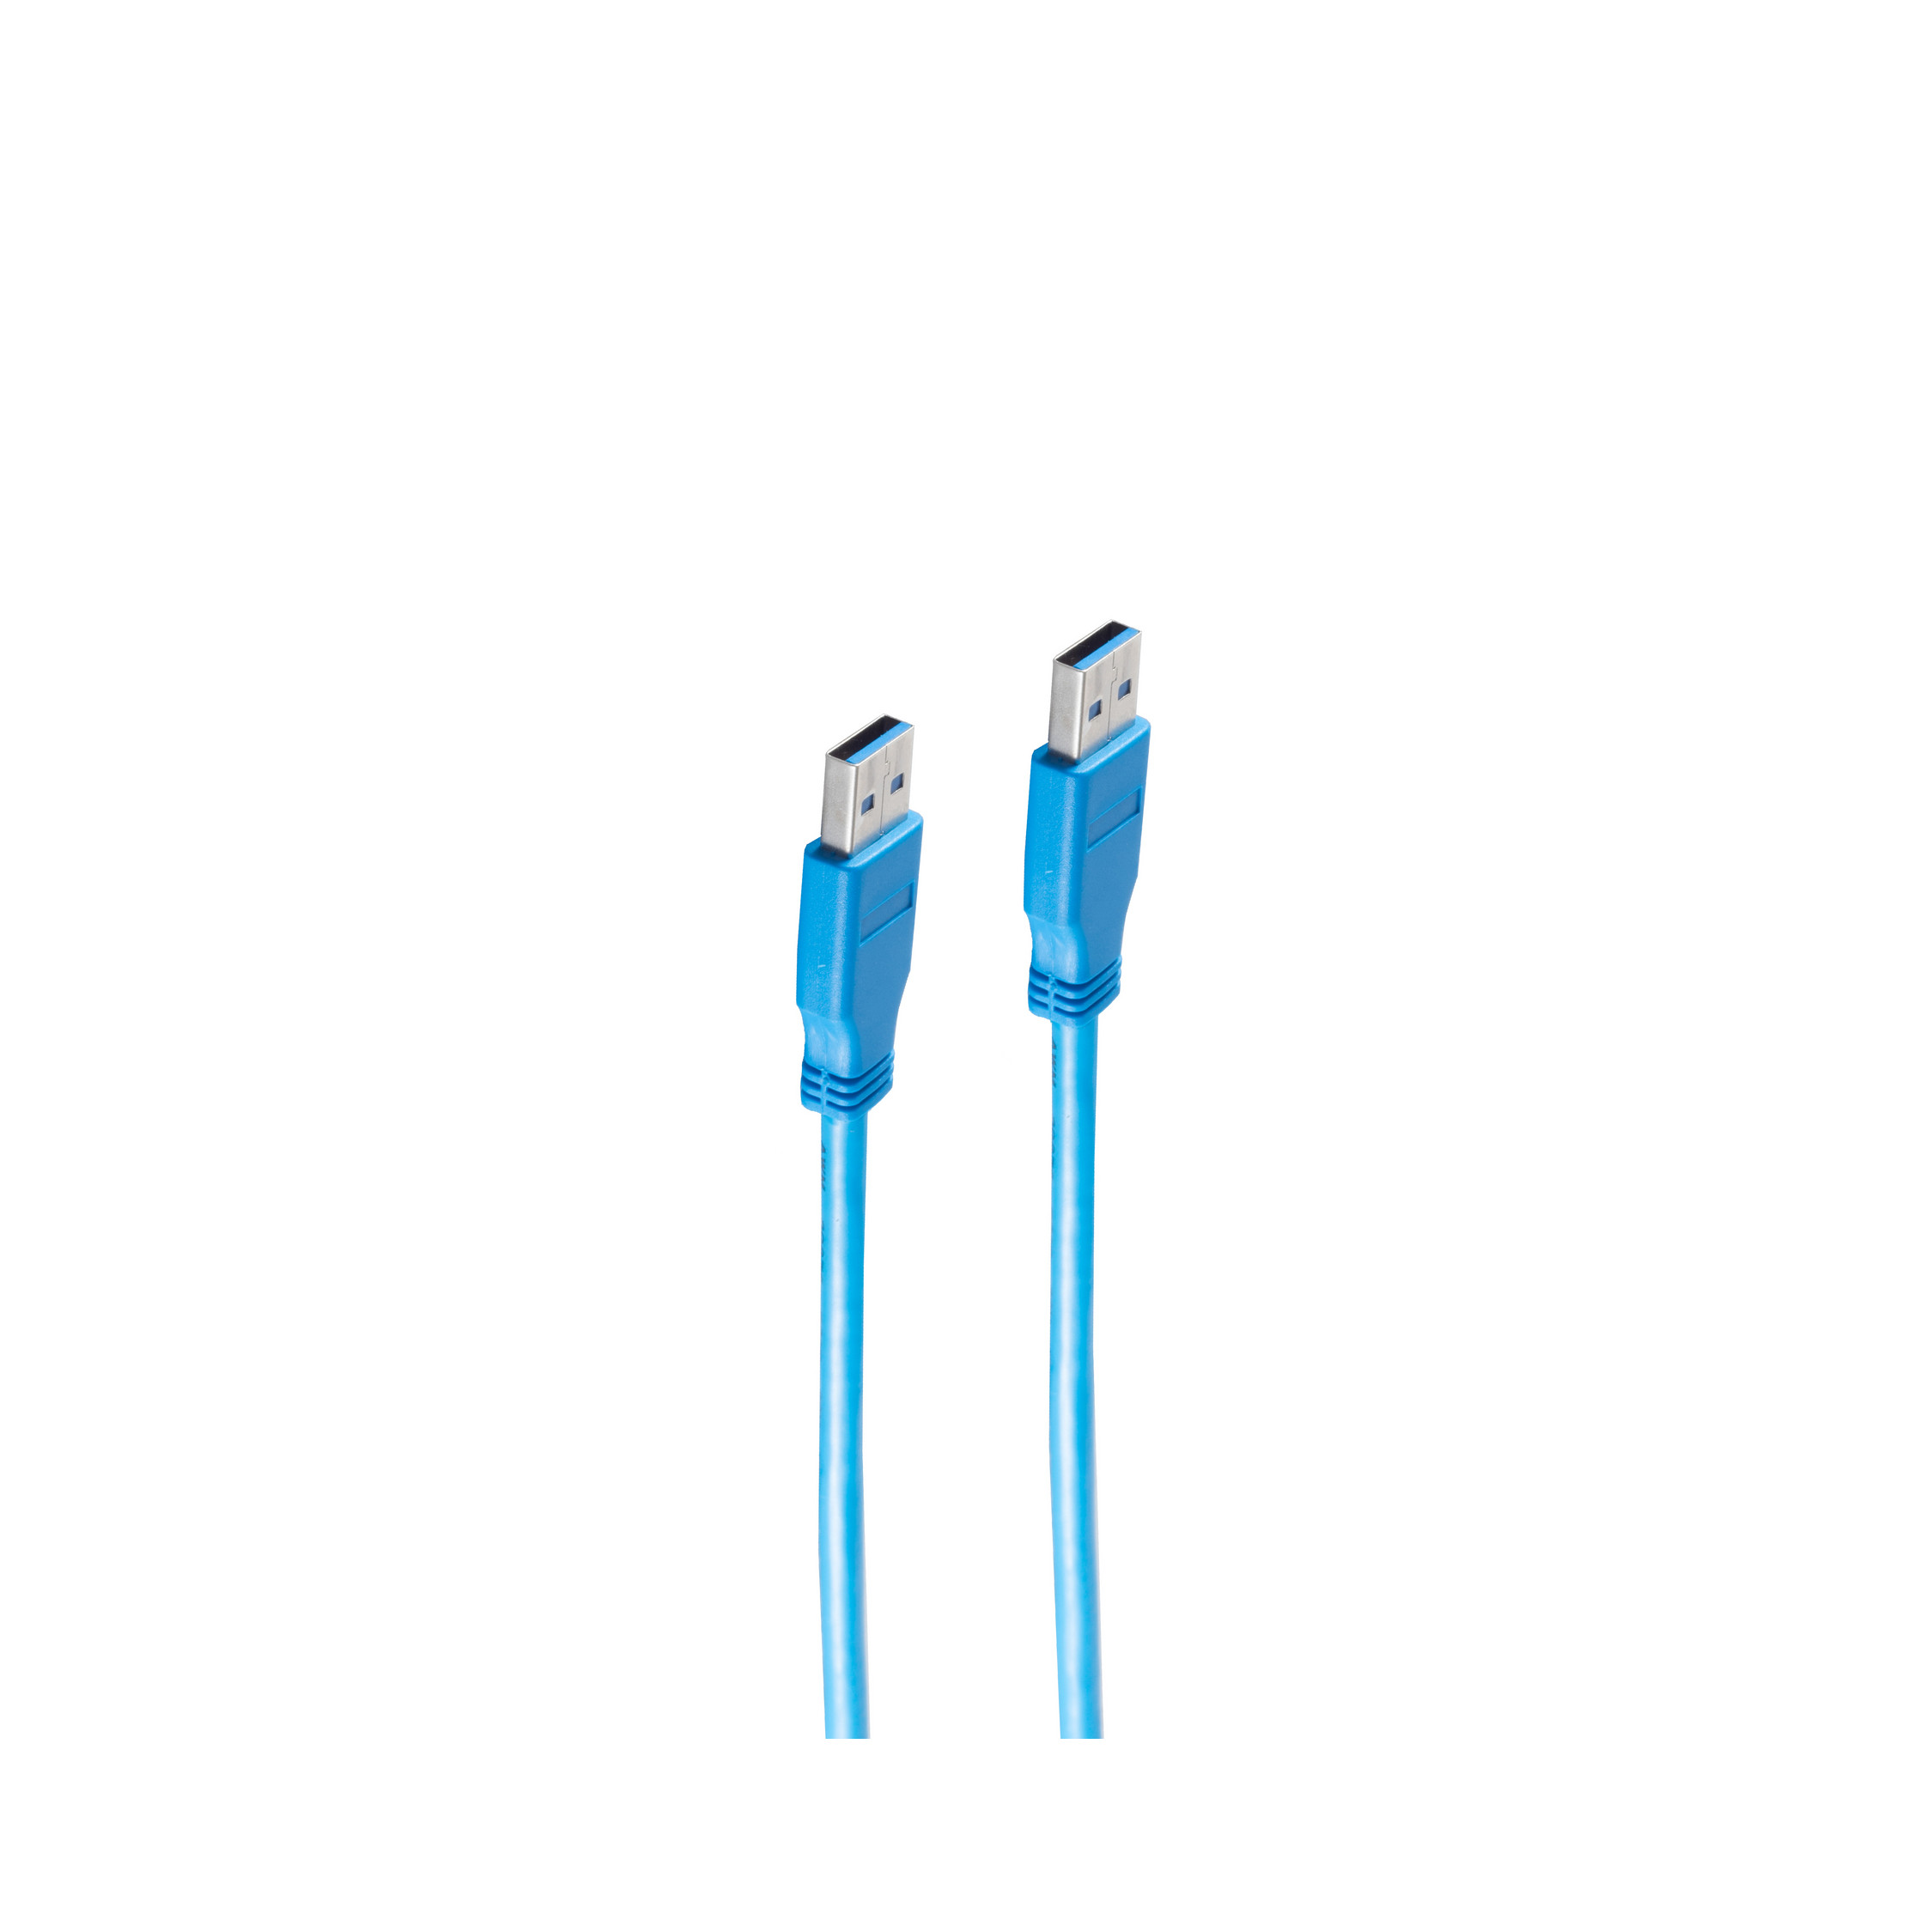 Kabel A A SHIVERPEAKS 5m USB Stecker blau USB 3.0 / USB Stecker Kabel